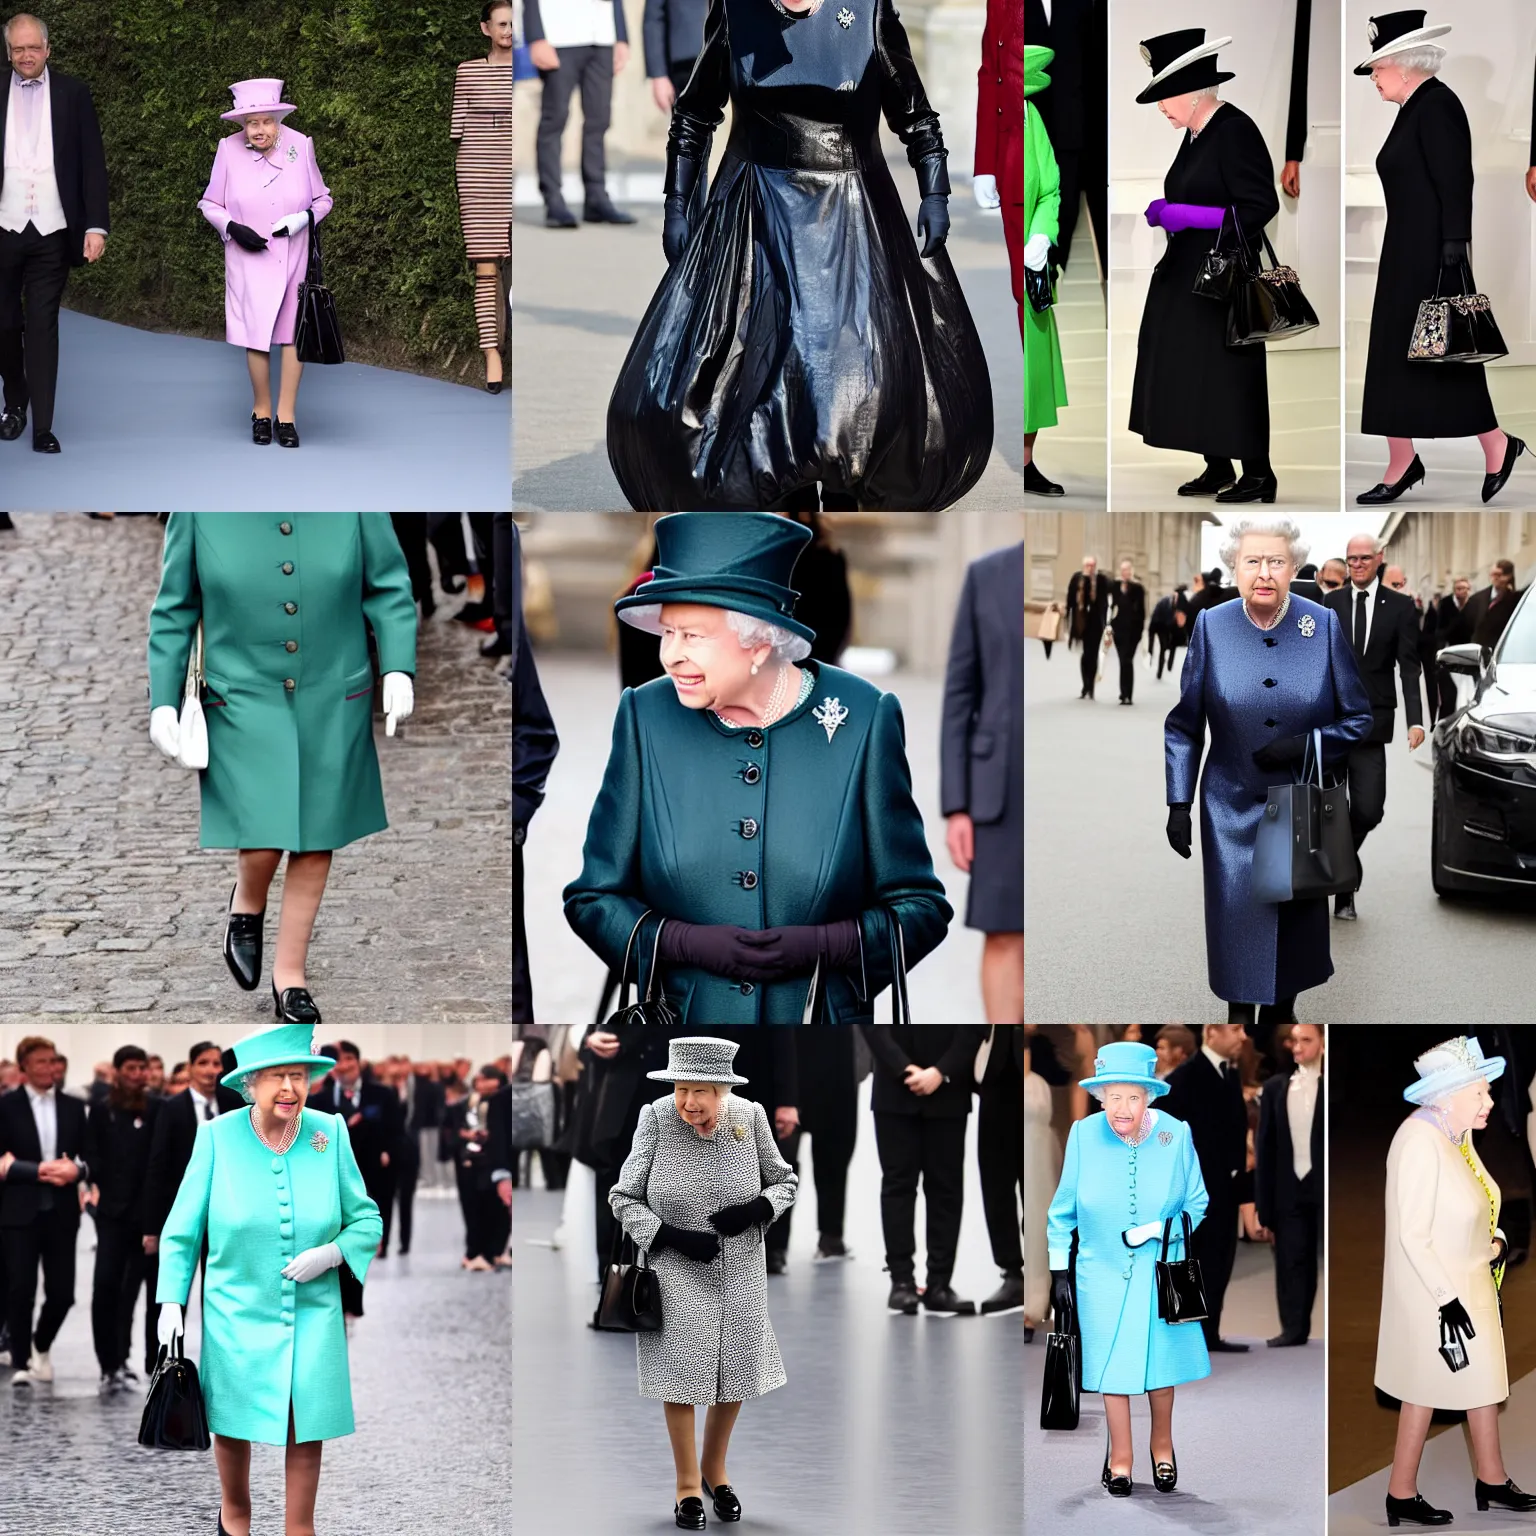 Prompt: queen elizabeth at milan fashion week on the walkway wearing a garbage bag